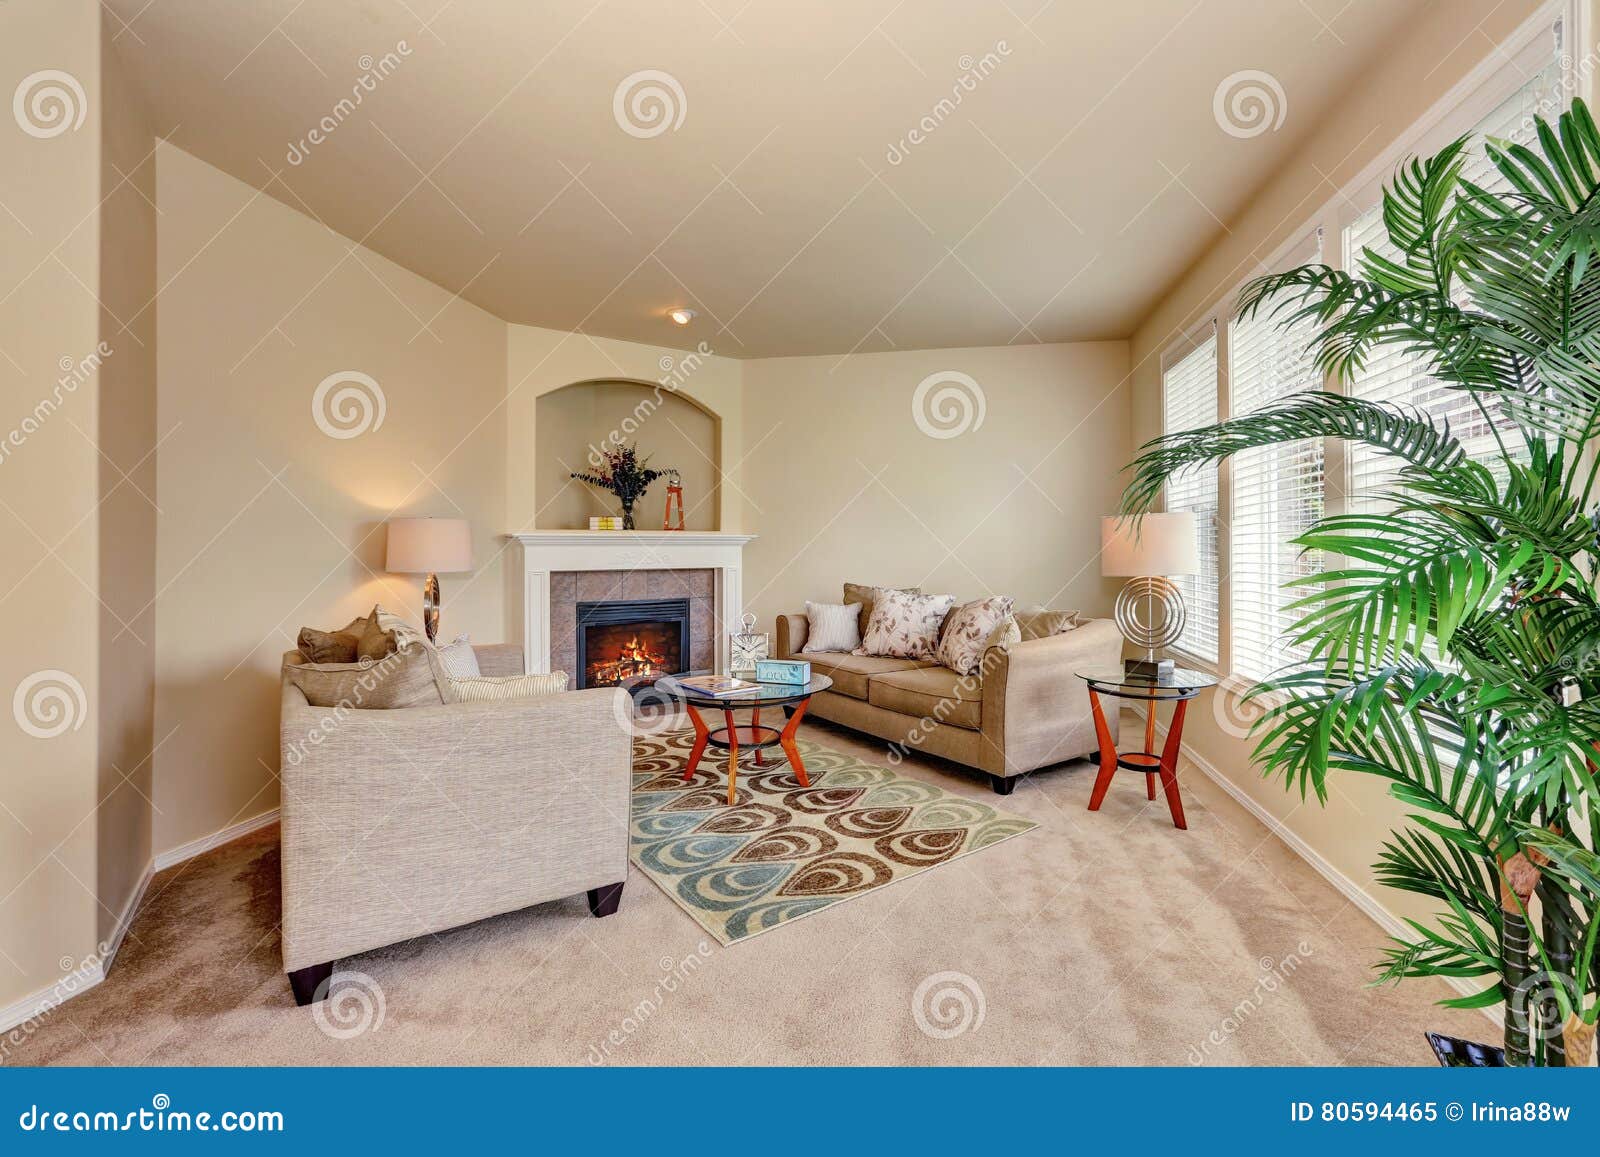 Cozy Beige Living Room Interior Design Stock Image - Image Of Floor, Lamp:  80594465